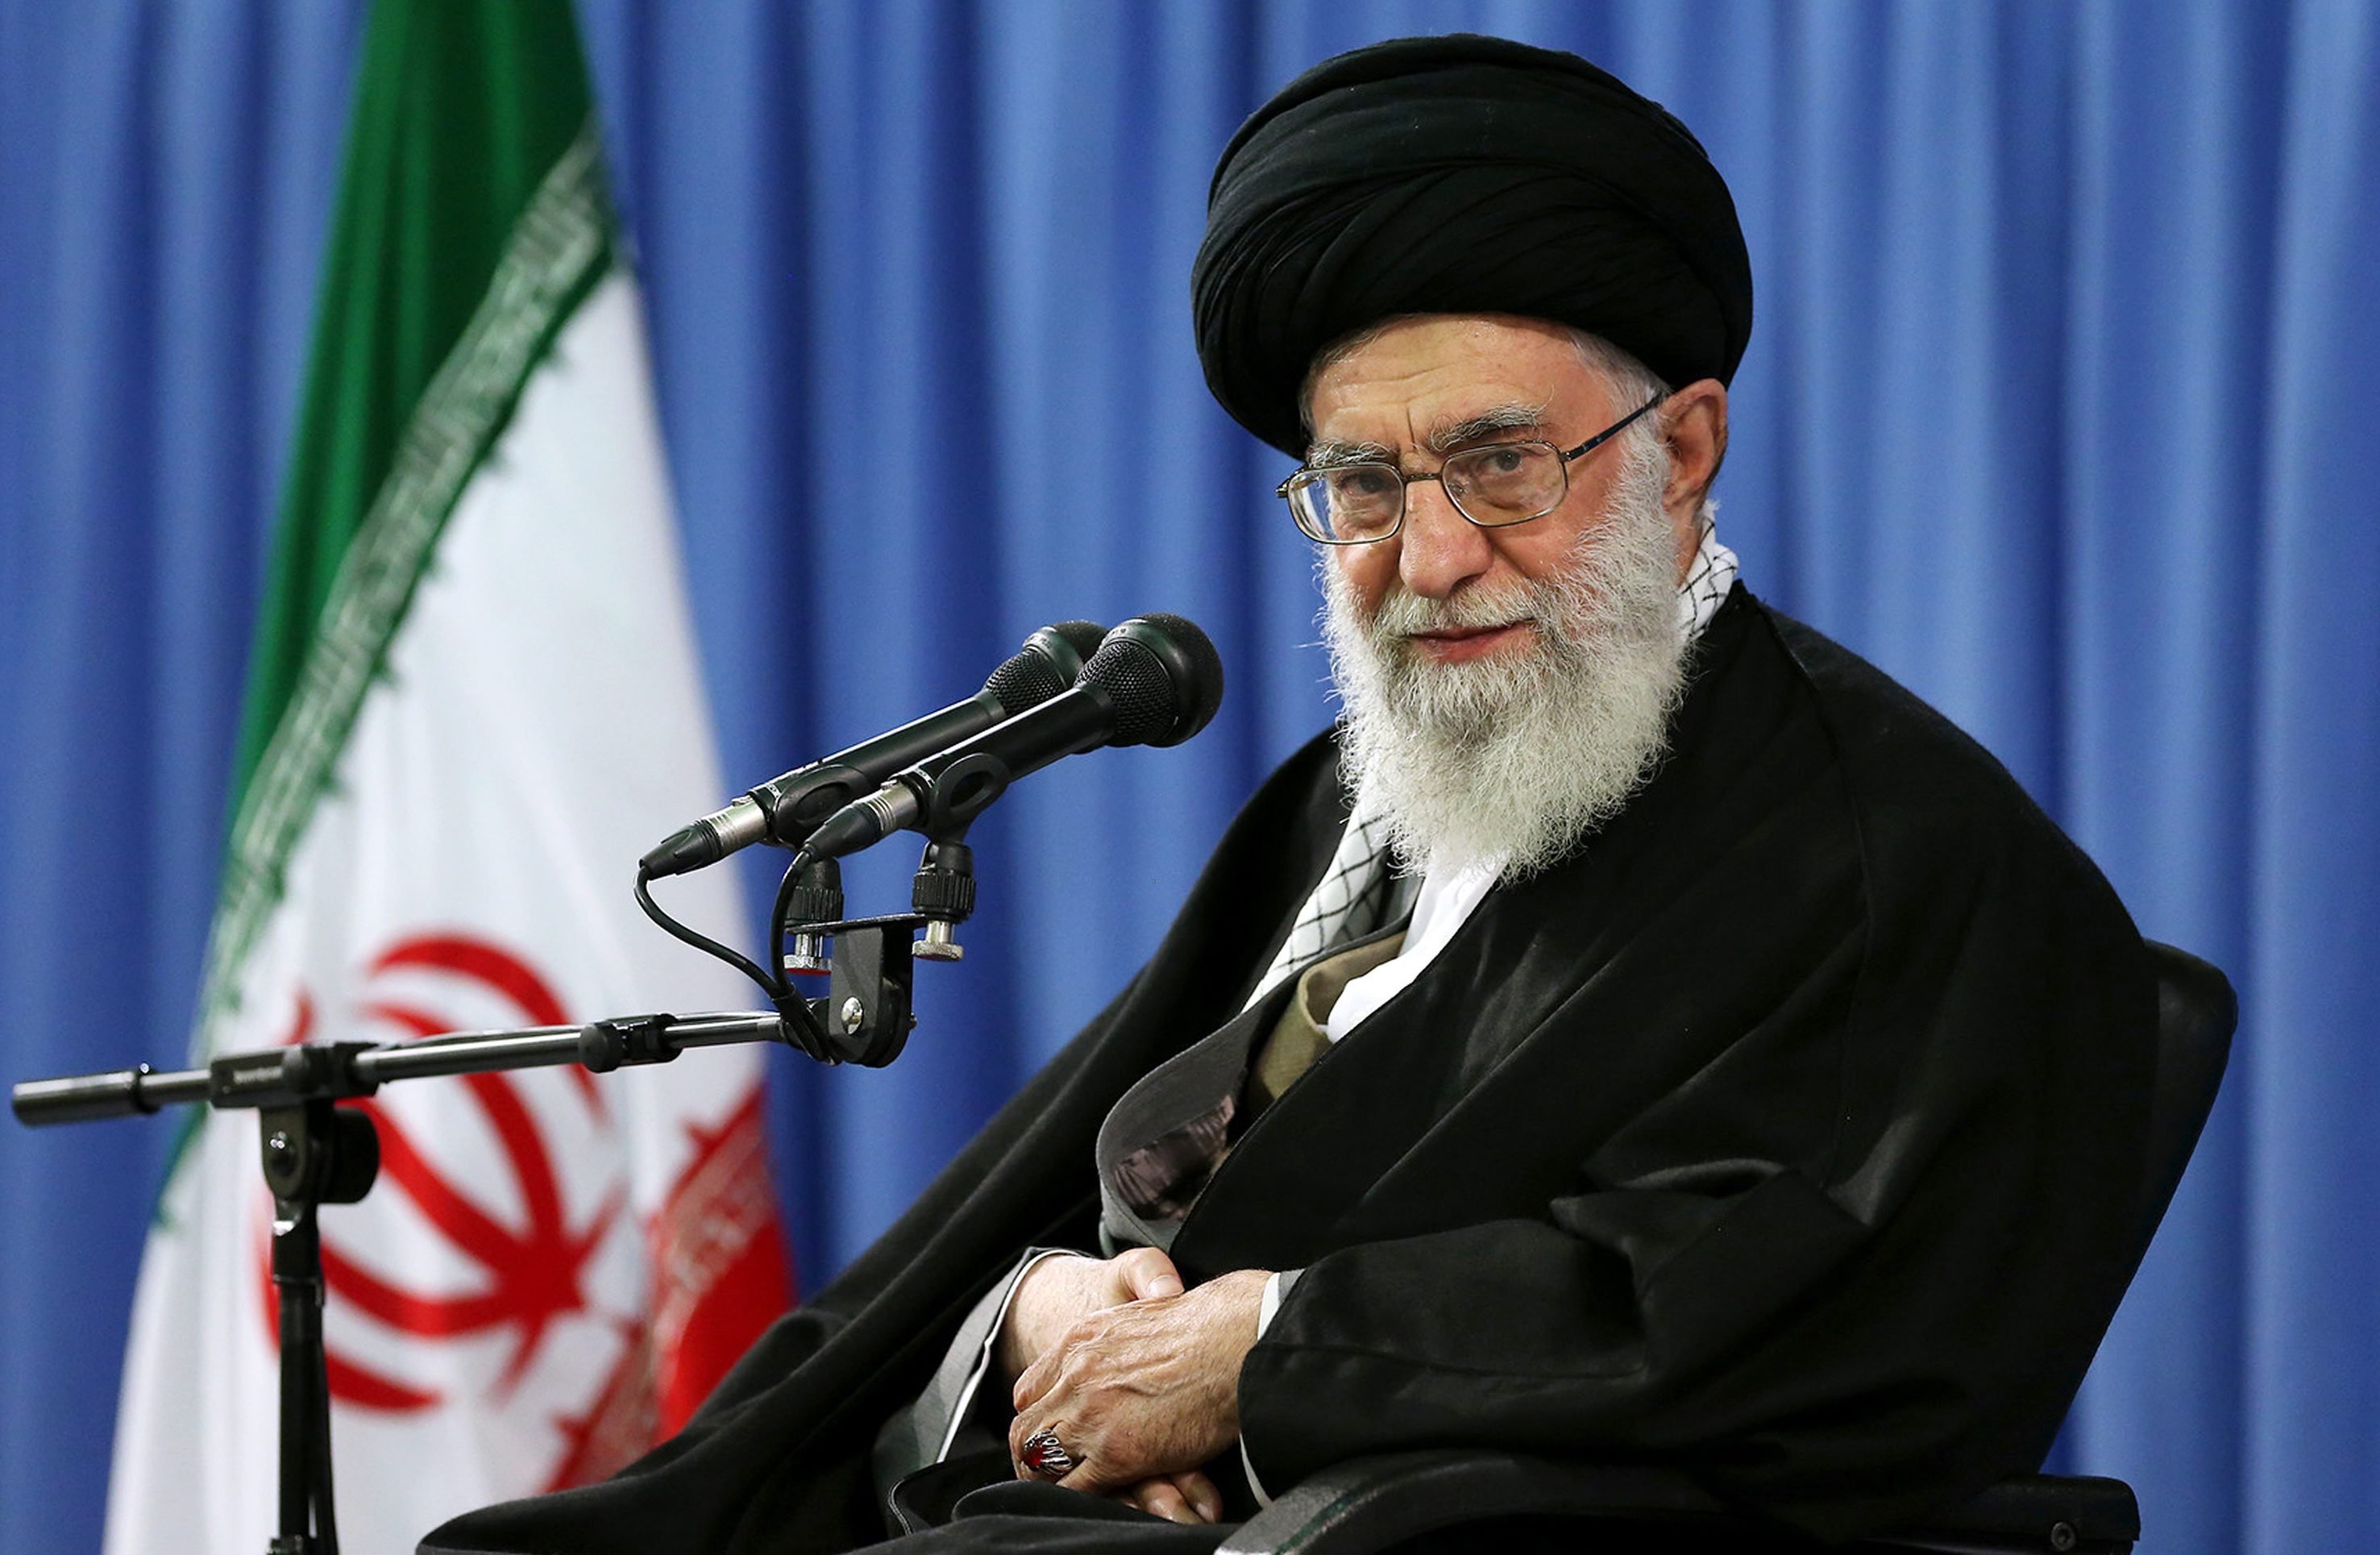 Supreme Leader, Ayatollah Ali Khamenei, speaking to crowds during a ceremony in Tehran on April 9, 2015. (Official Supreme Leader Website/EPA)